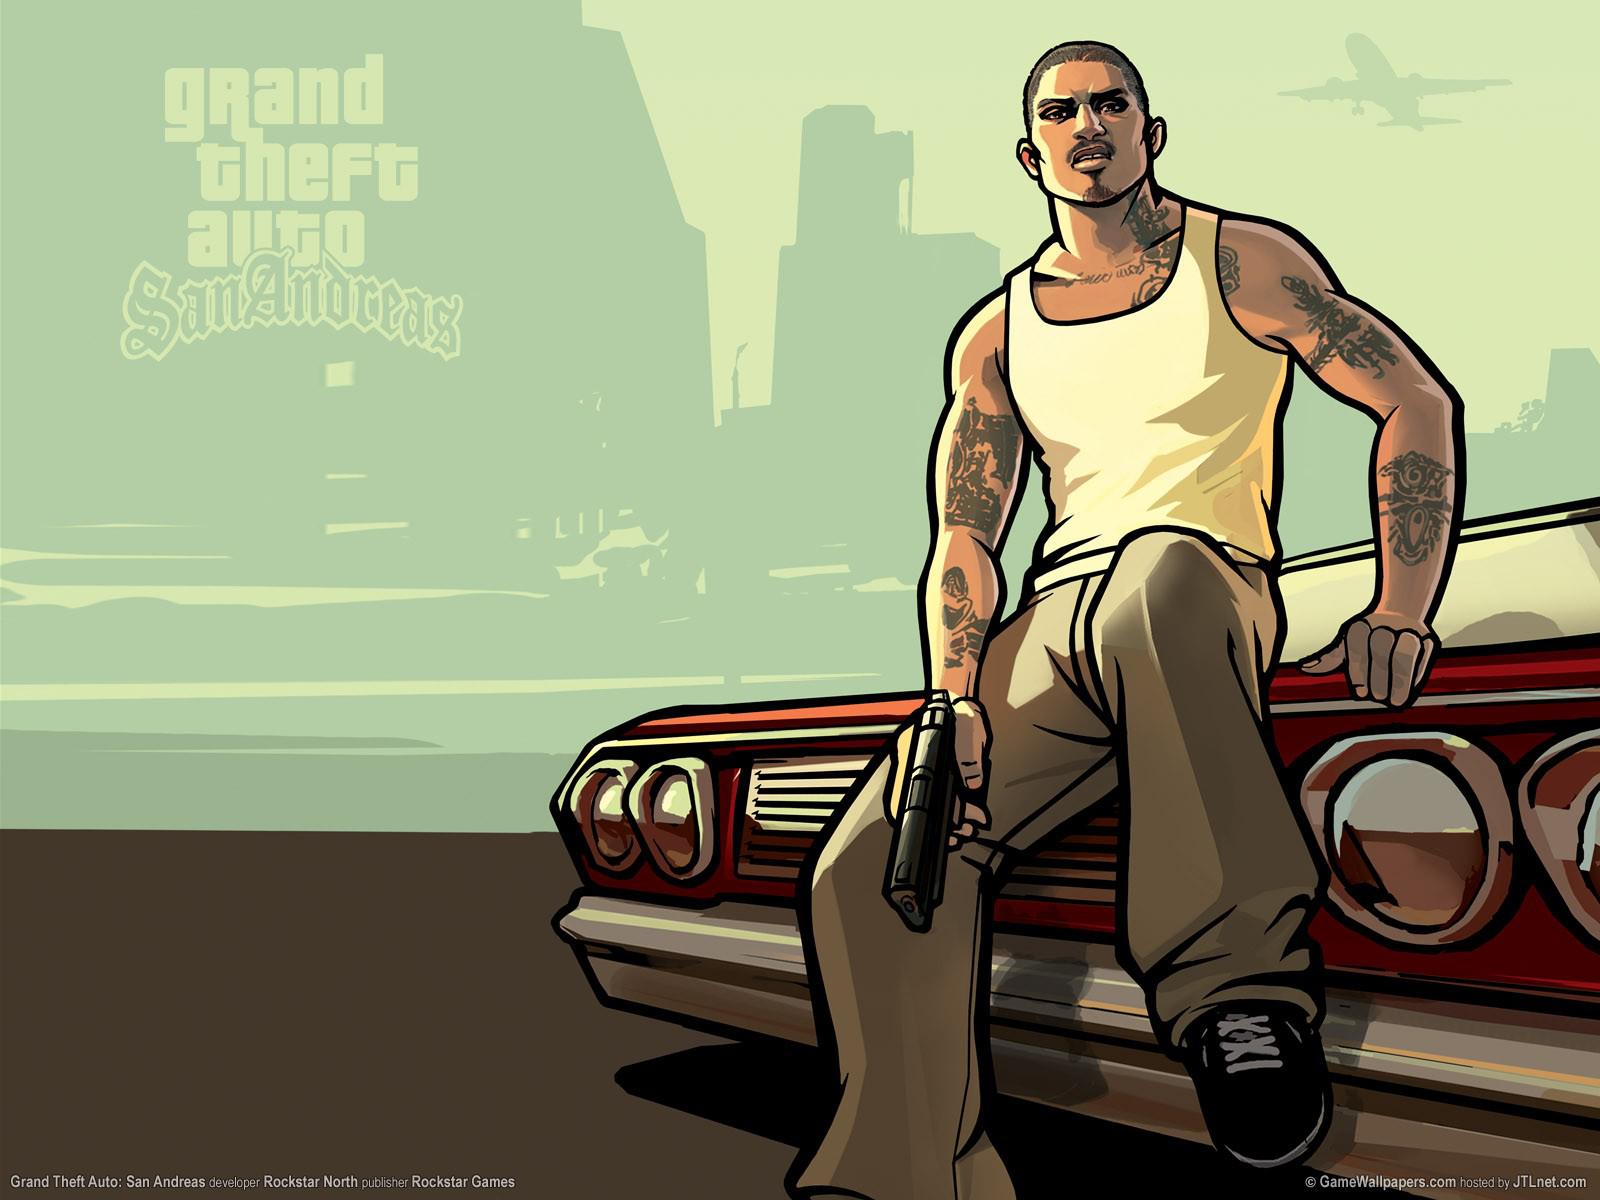 Grand Theft Auto: Andreas - Videojuegos - Meristation